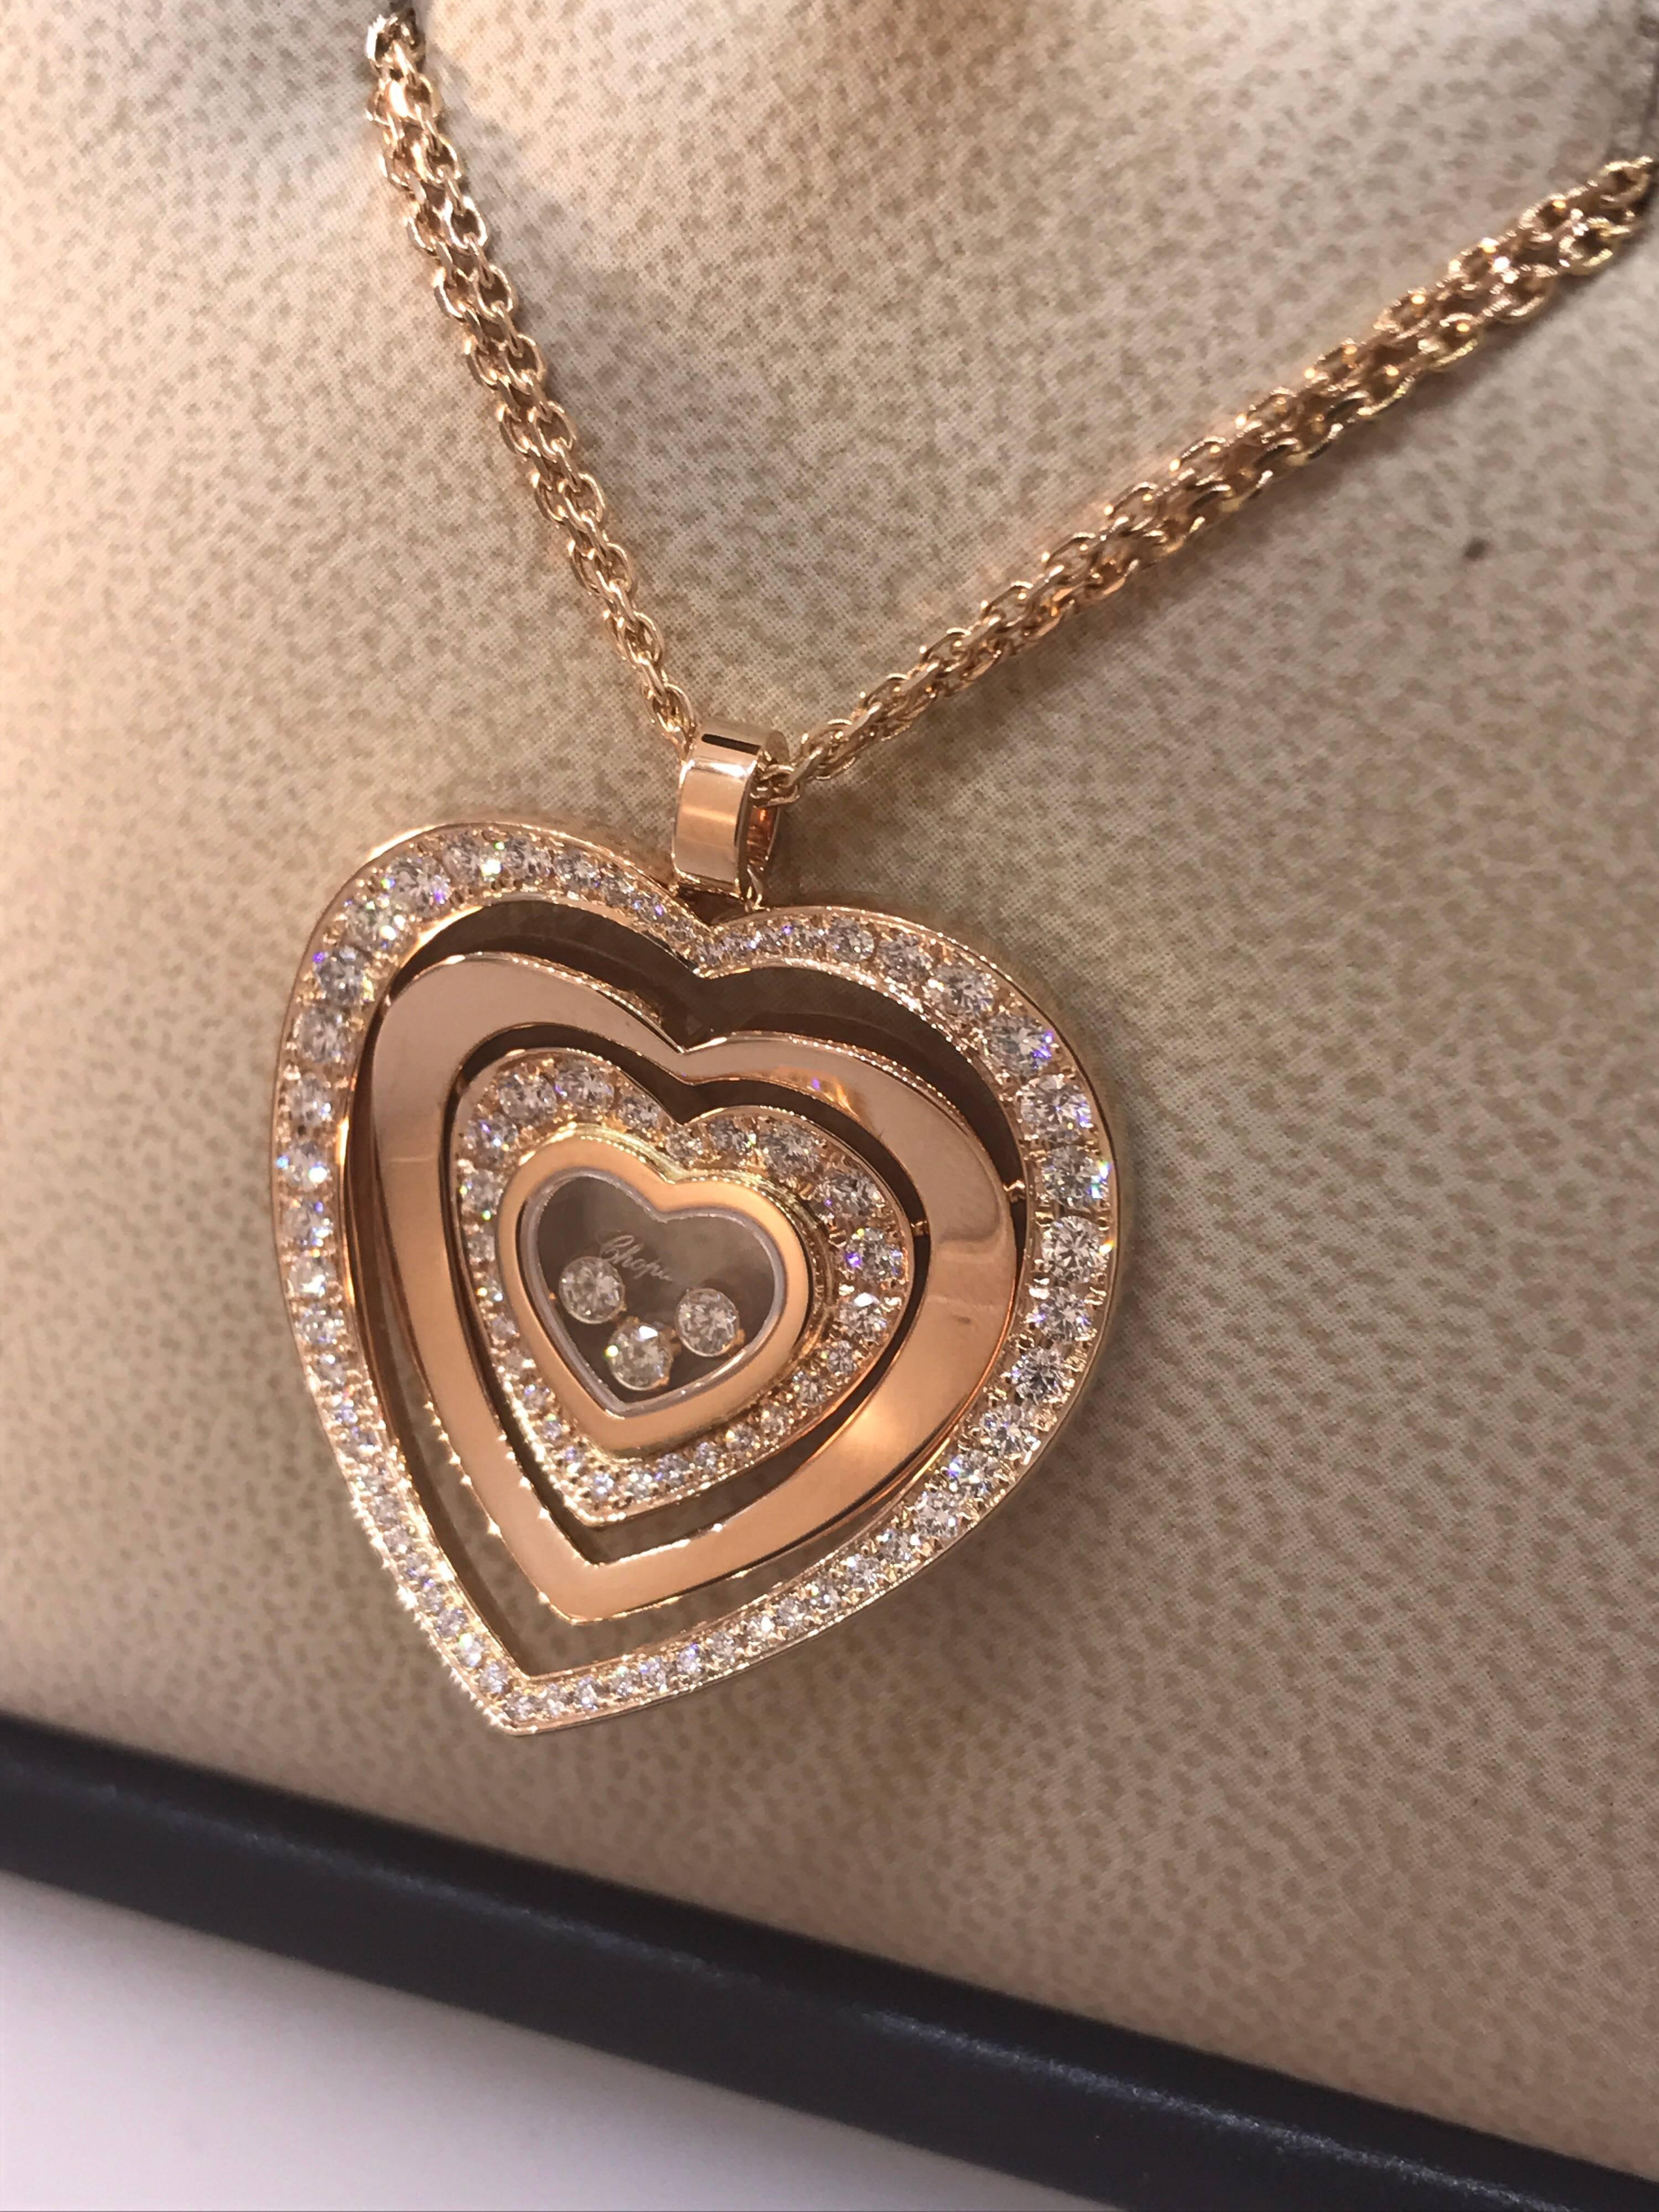 Chopard Happy Diamonds 18 Karat Rose Gold Heart Pendant Necklace 79/7221-5002 For Sale 2